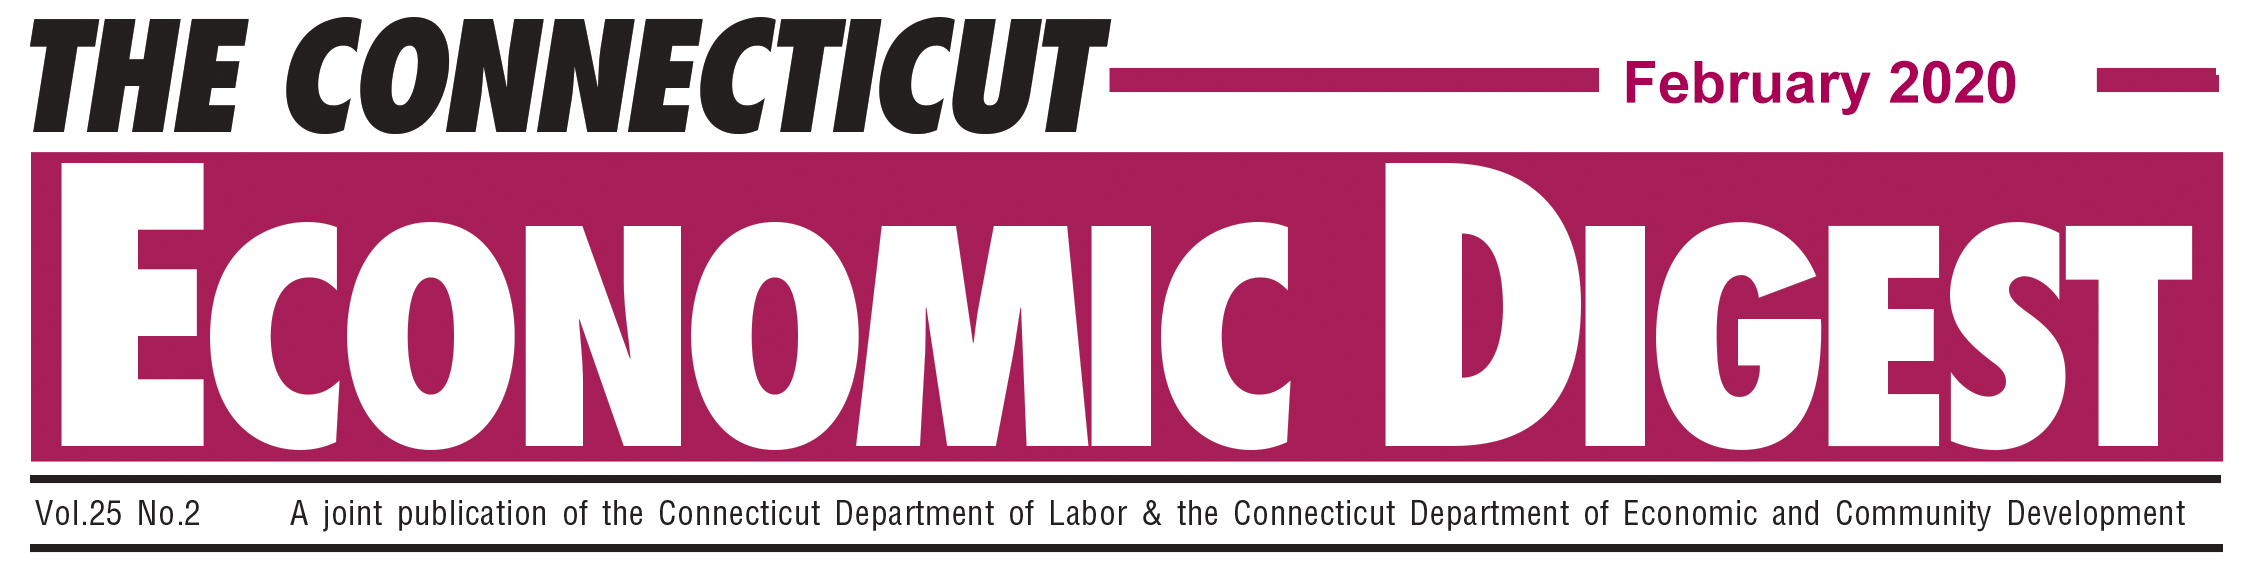 February 2020 Connecticut Economic Digest